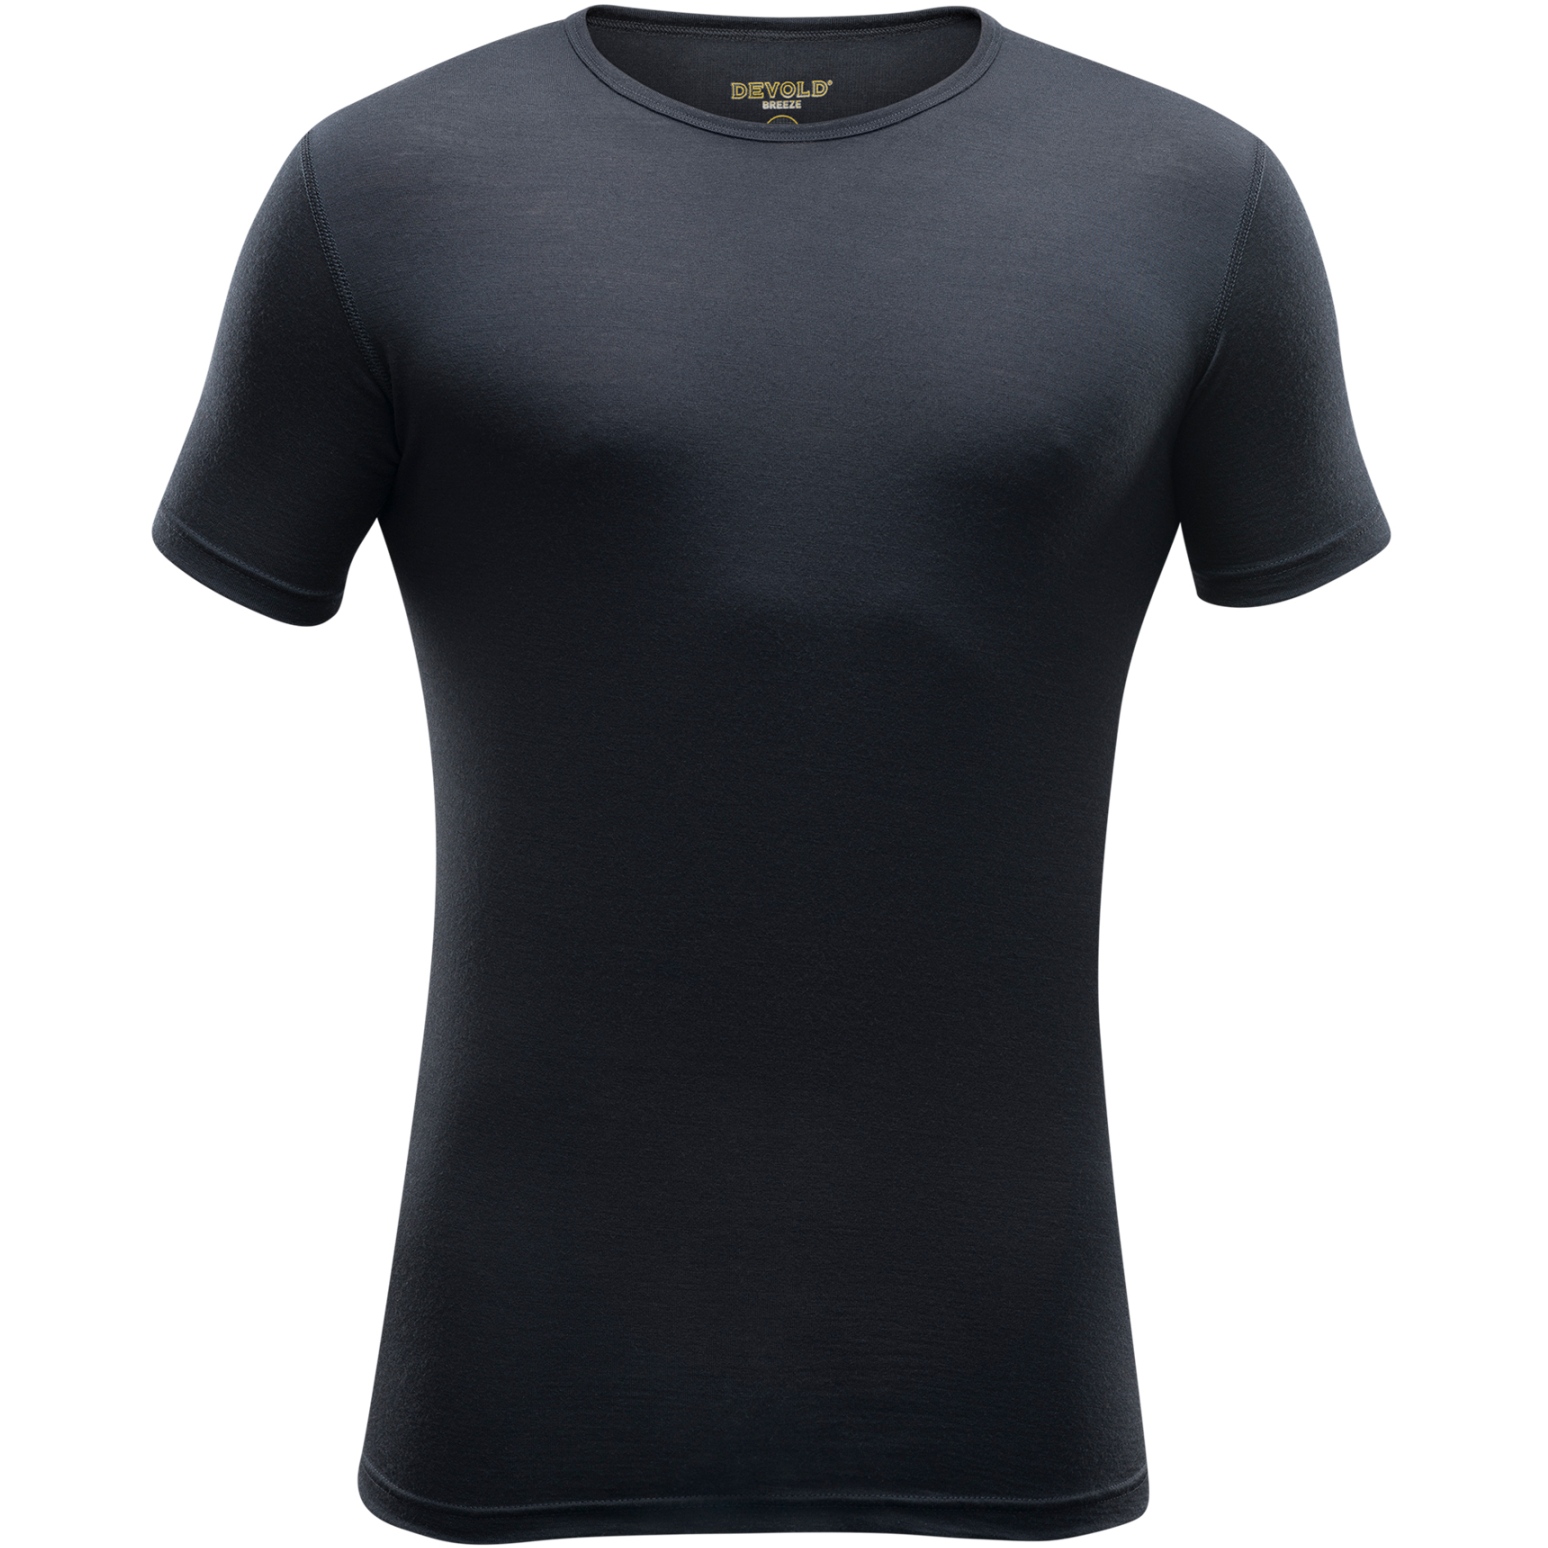 Picture of Devold Breeze Merino 150 T-Shirt Men - 950A Black